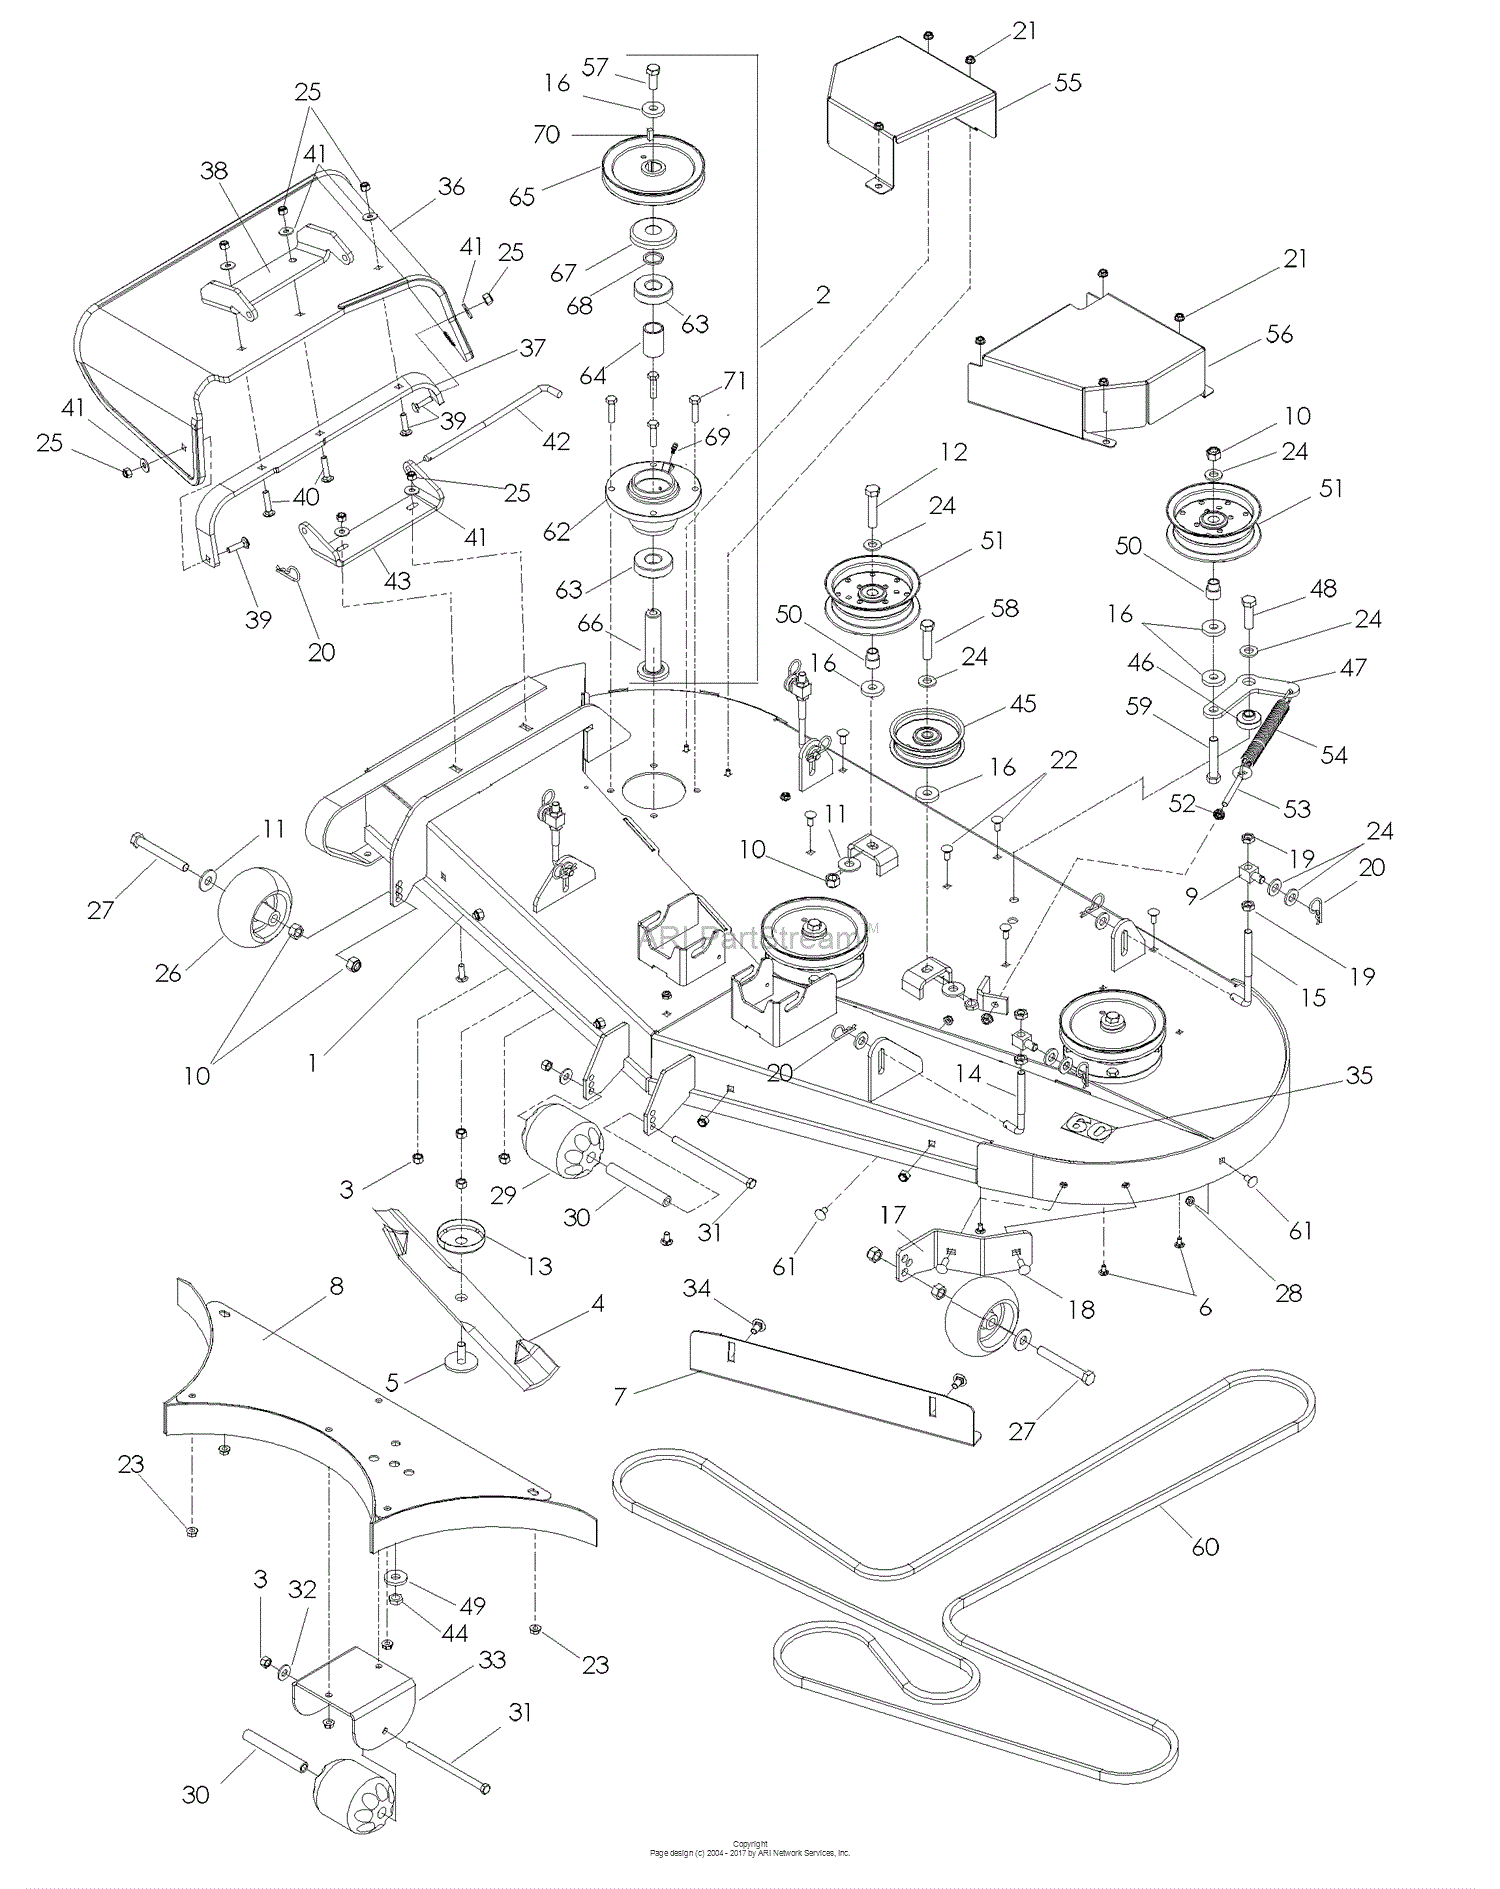 Dixon RAM ULTRA XS6025 60 KOHLER - 968999723 (2008) Parts Diagram 